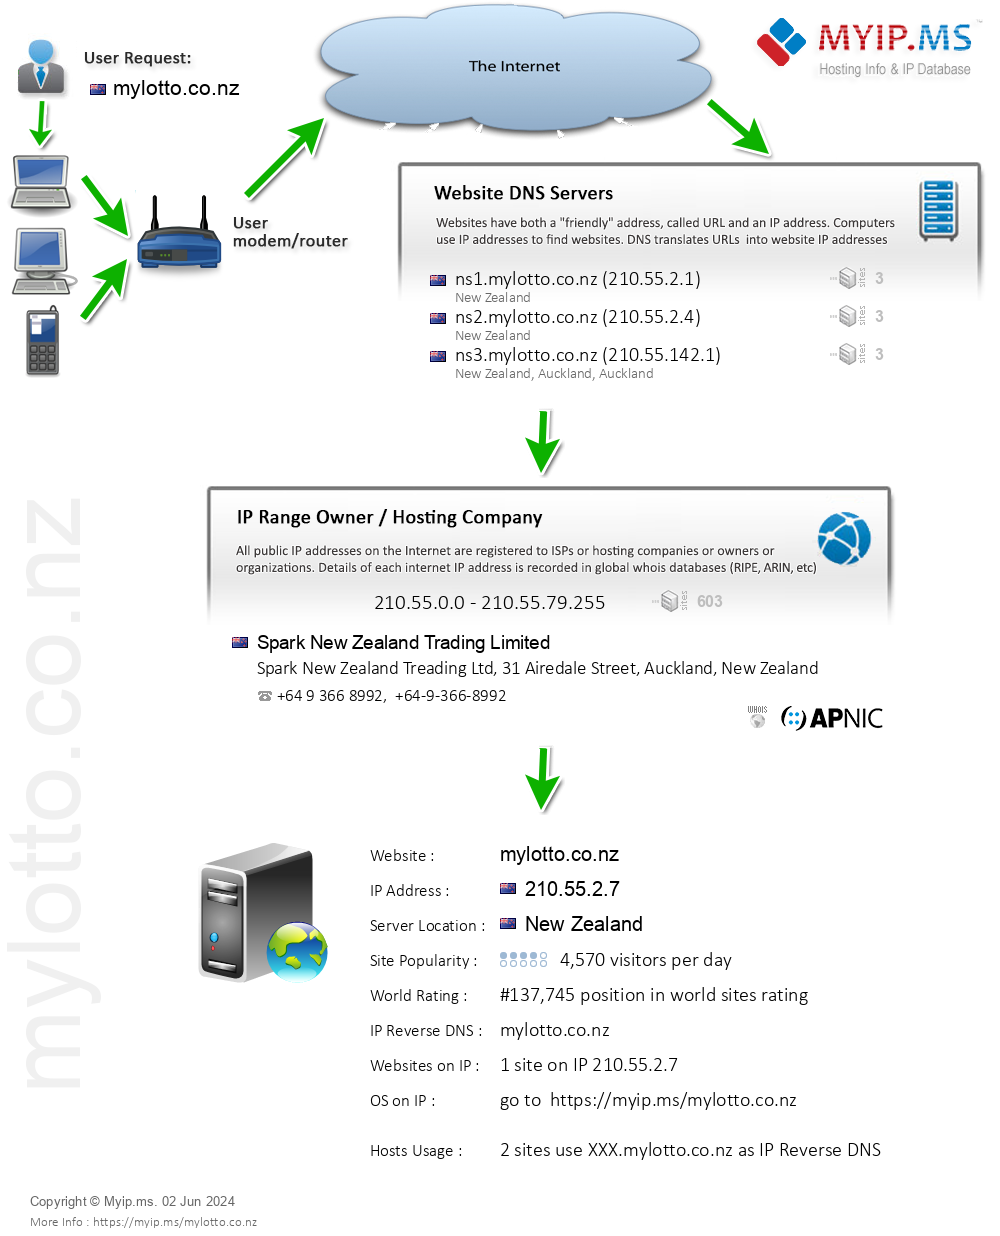 Mylotto.co.nz - Website Hosting Visual IP Diagram